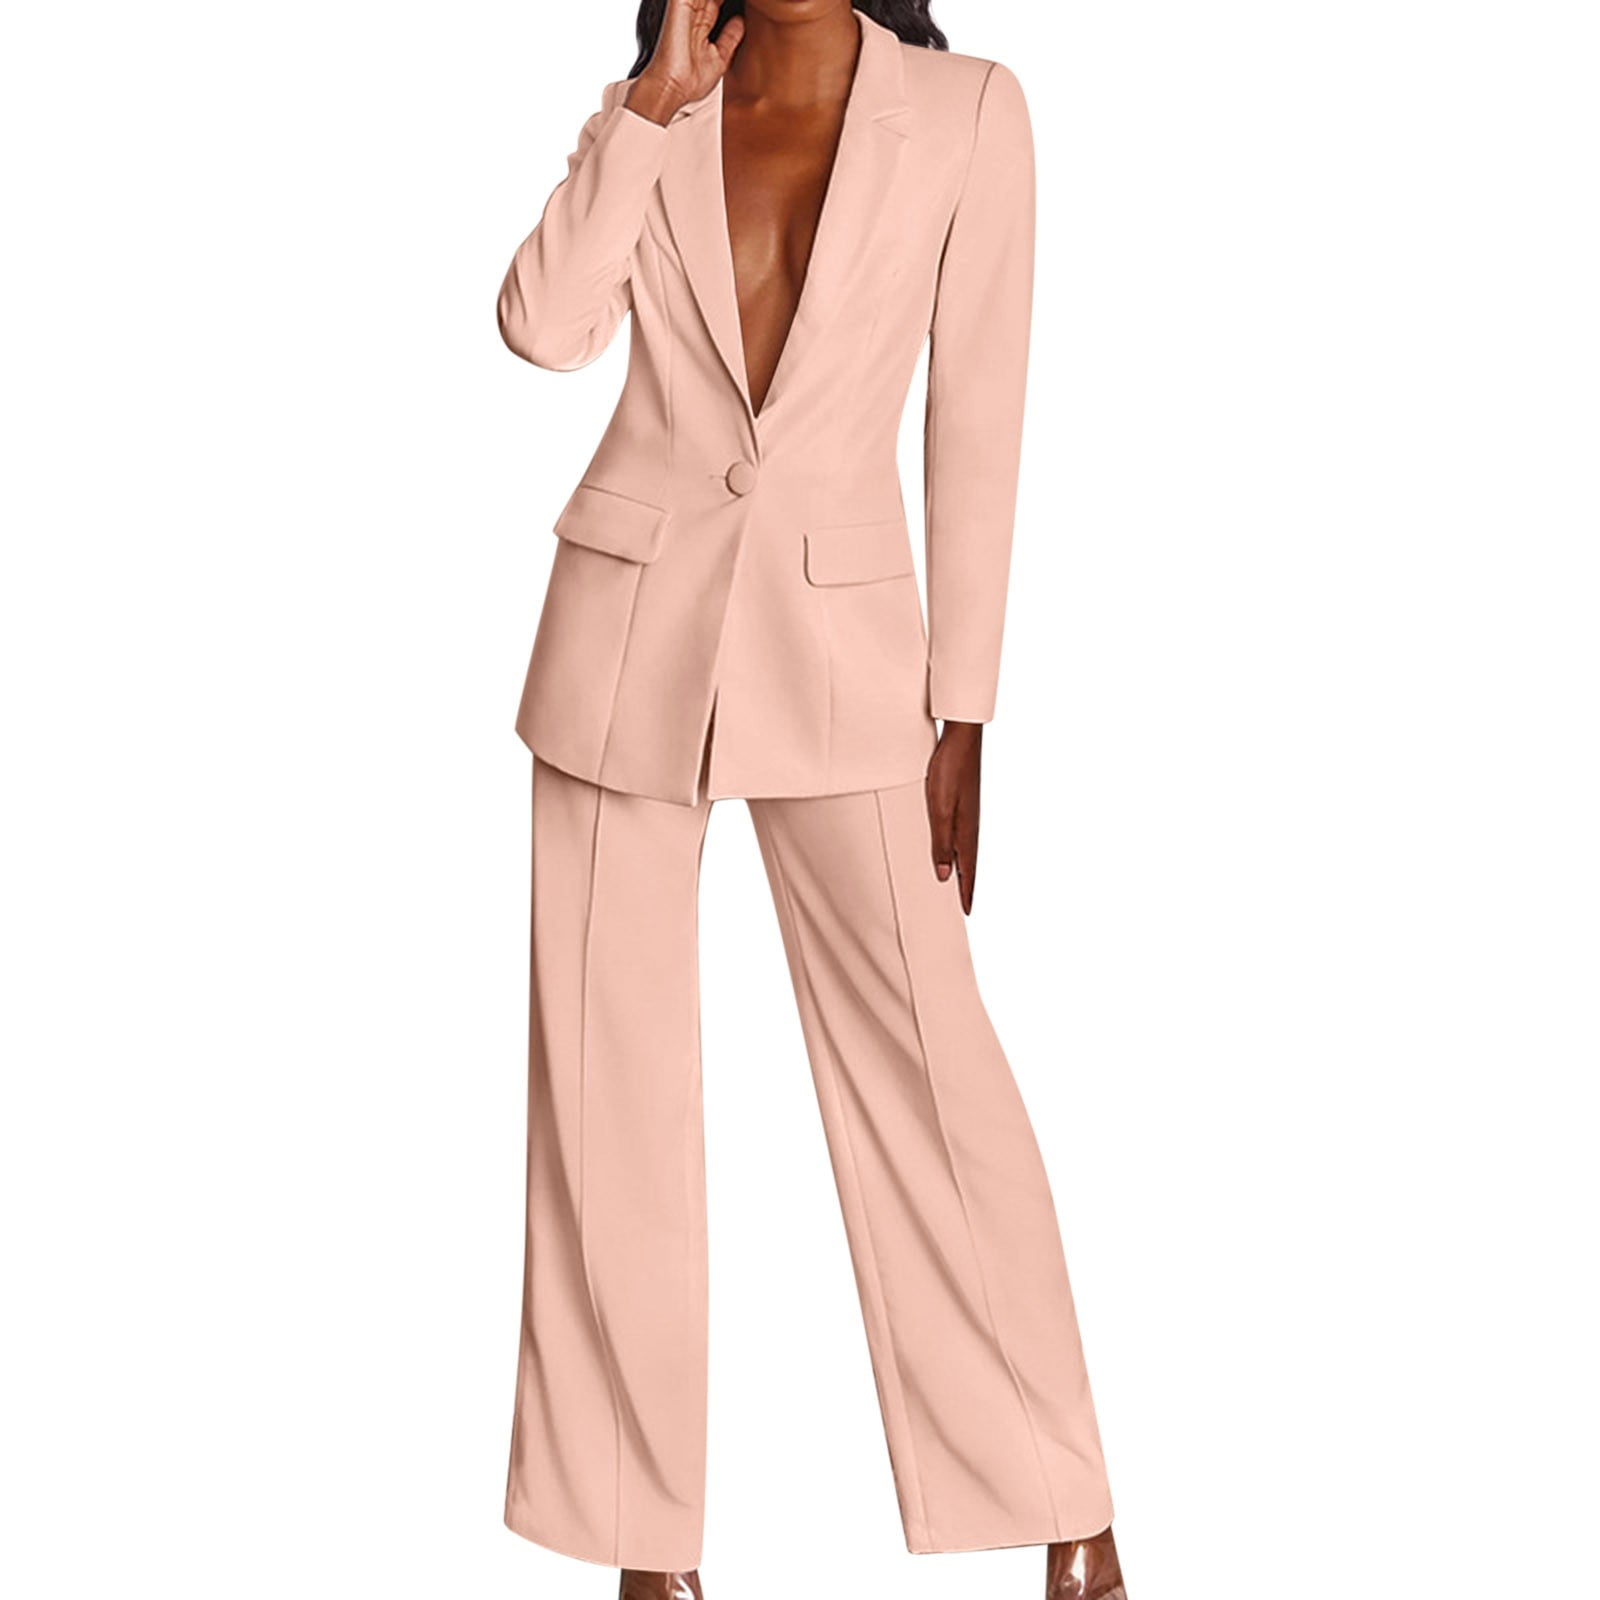 ZIZOCWA 3 Piece Sets for Women Petite Pant Suits for Women Women'S Casual  Solid Long Sleeve Suits Button Coat High Waist Long Pant Two Piece Set  Pants